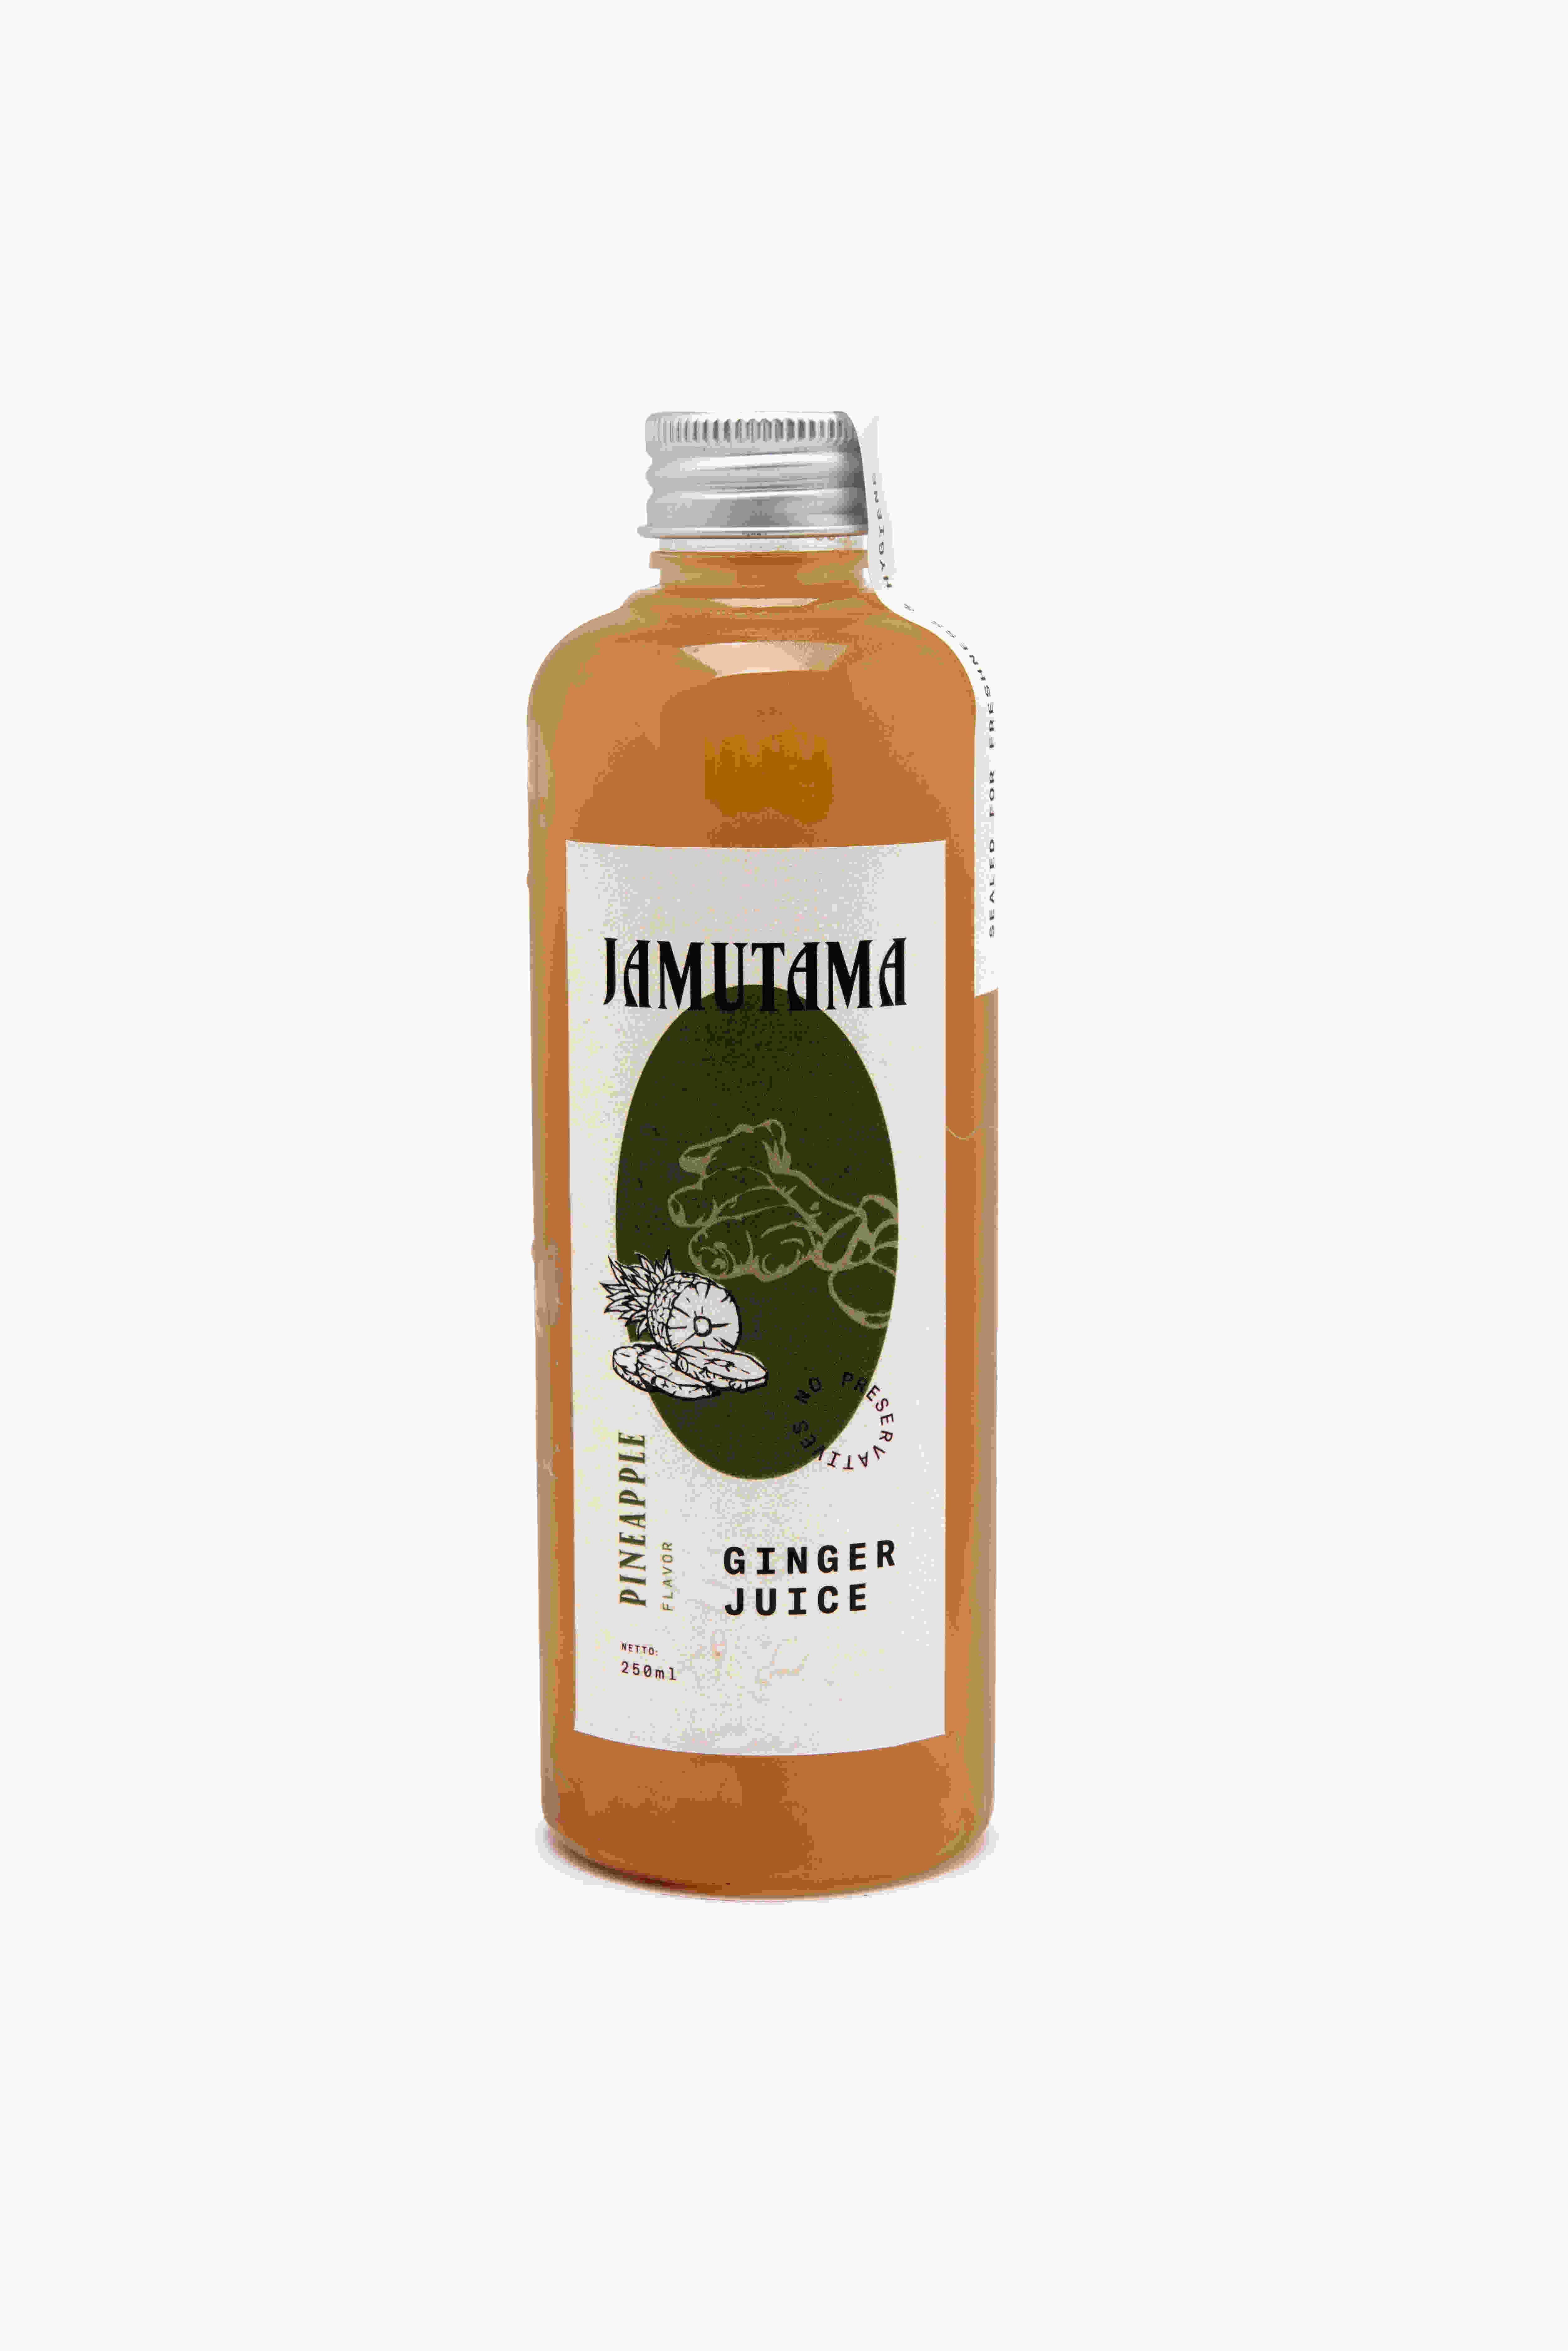 Jamutama Ginger Juice Pineapple / Jahe Nanas (250ml)